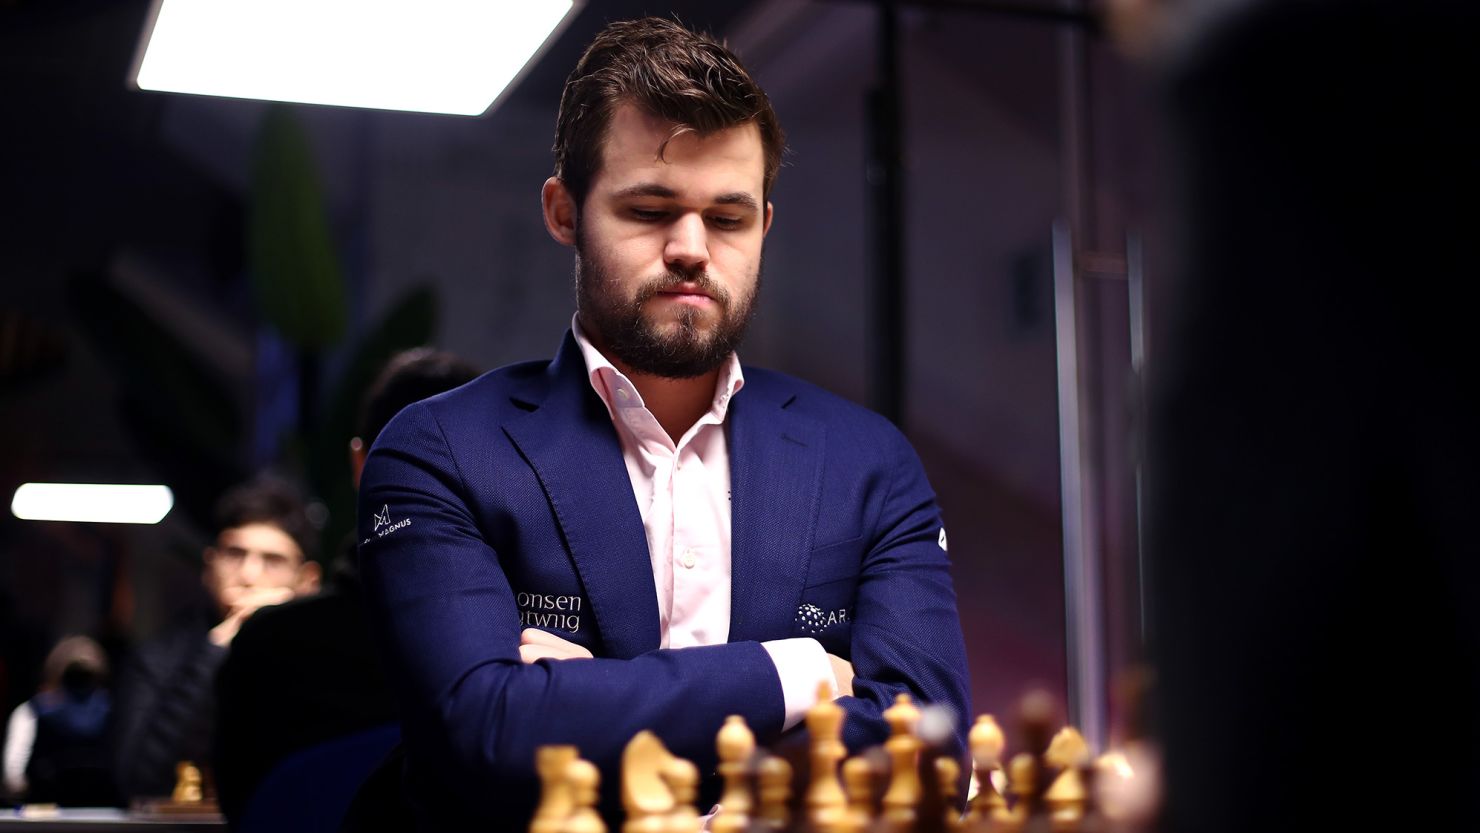 Daniil Dubov - Russian chess grandmaster - Whois 